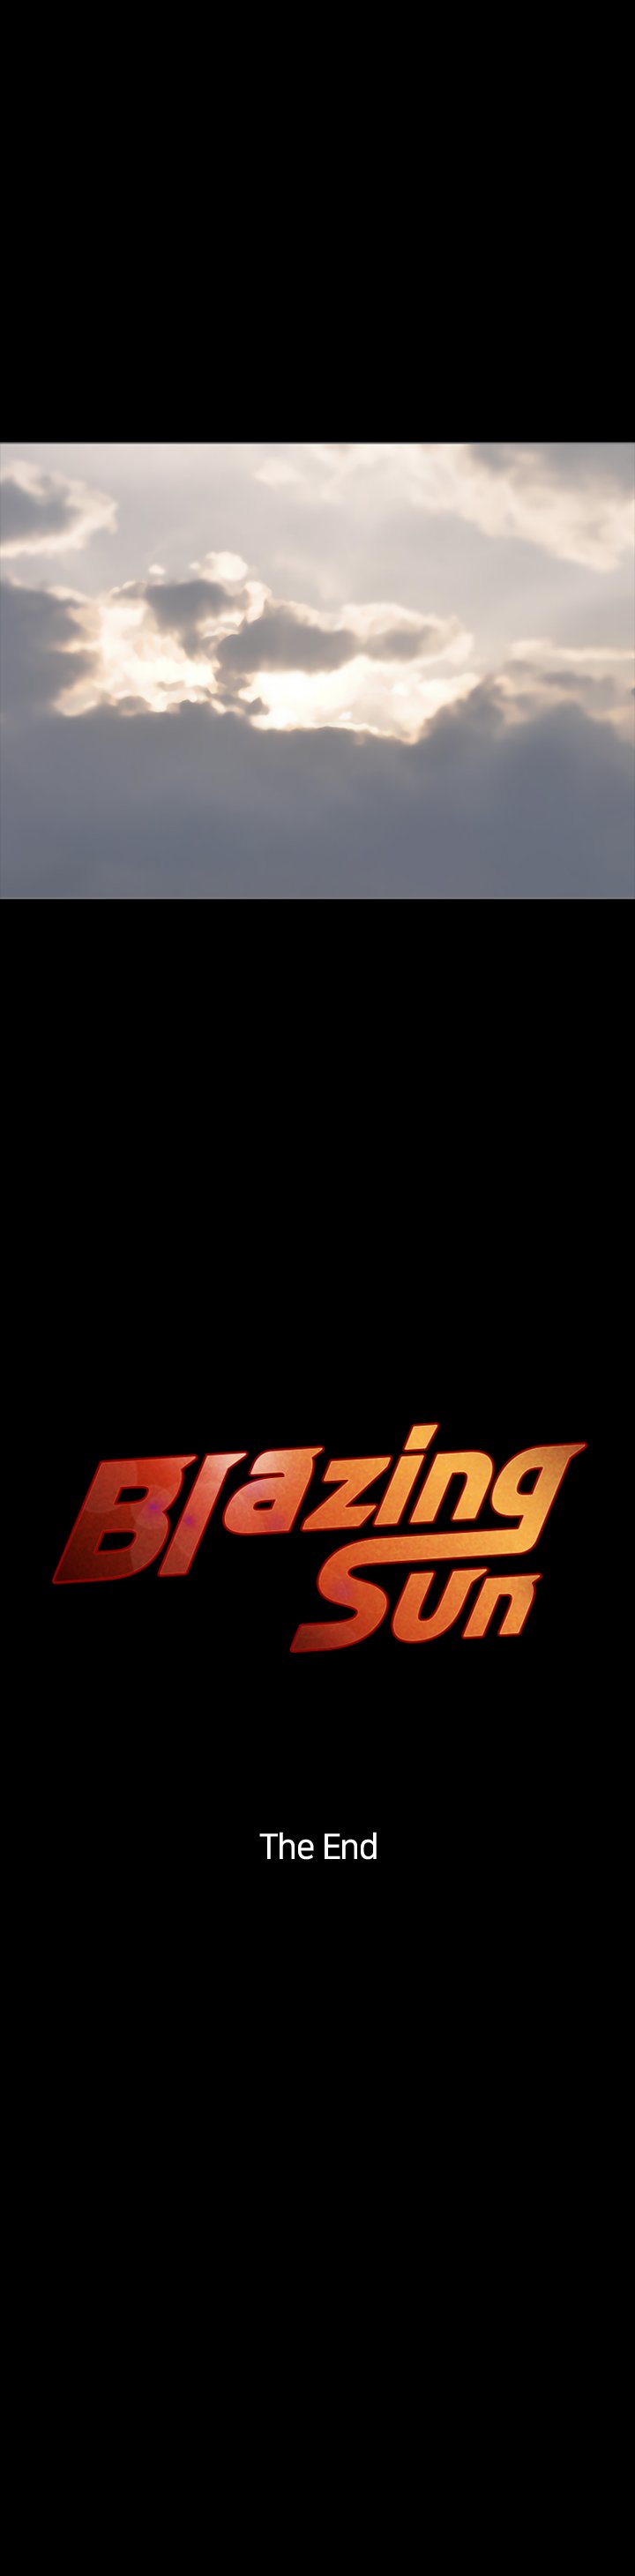 Blazing Sun image